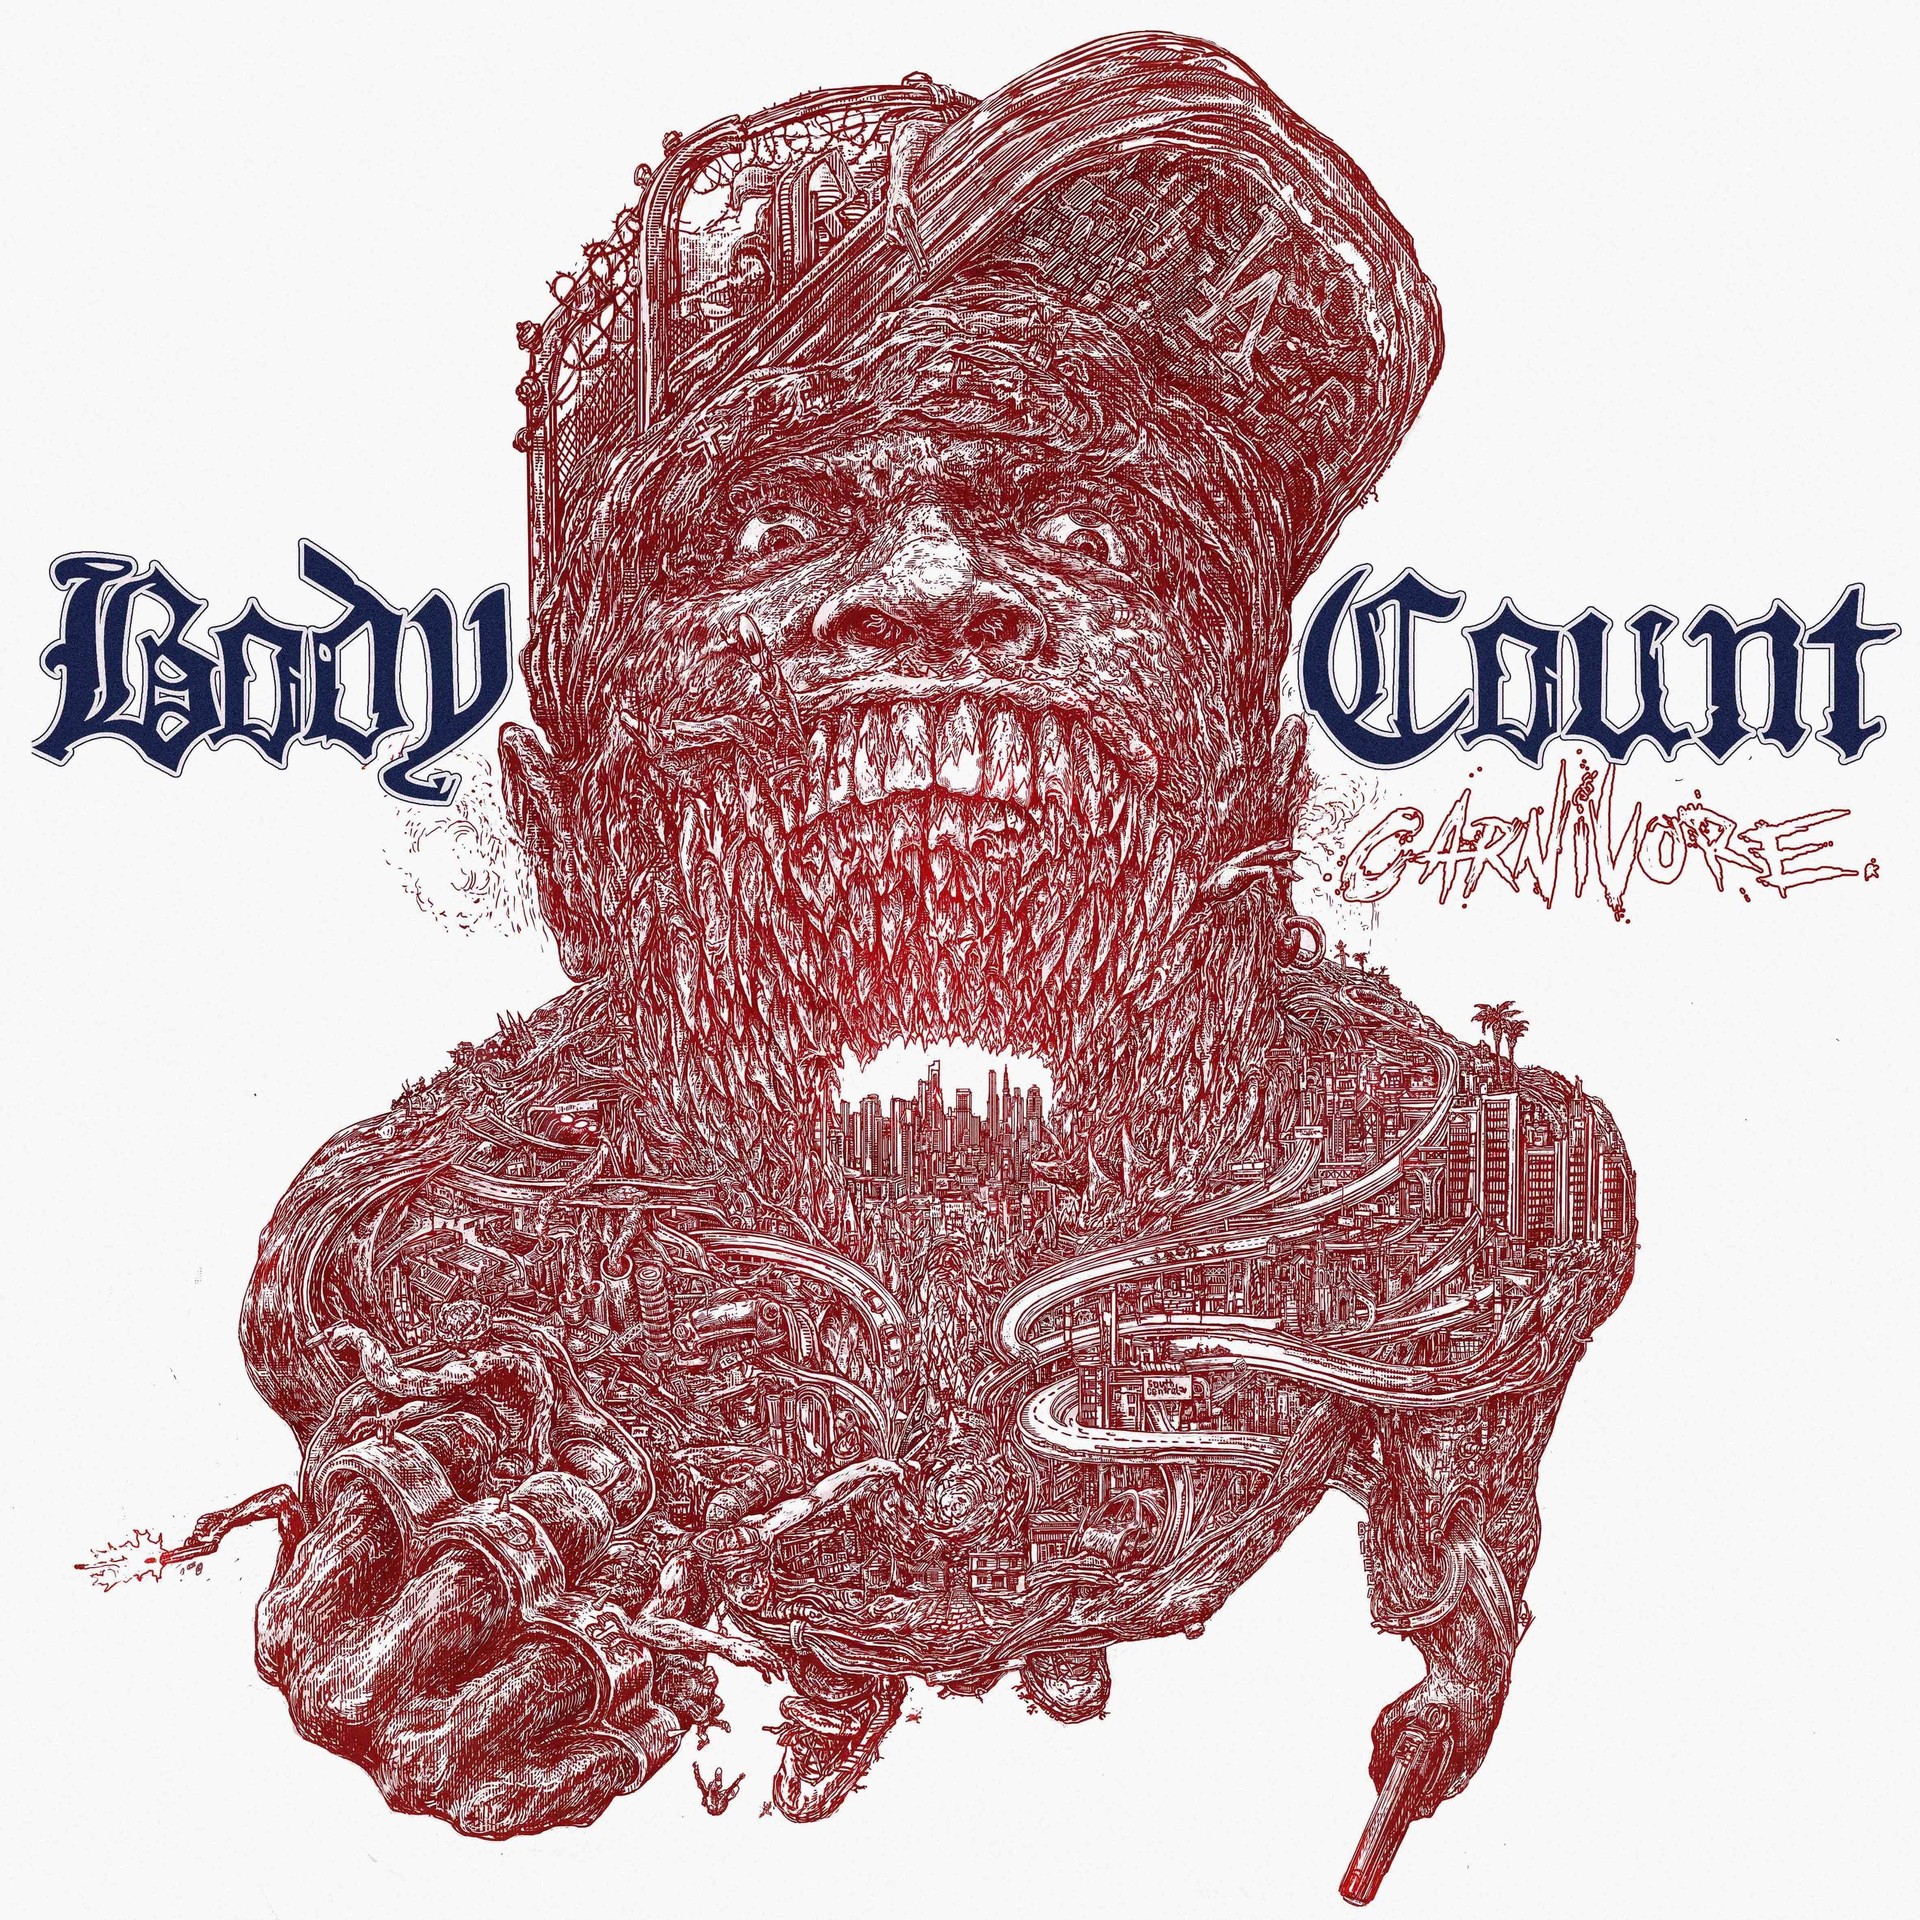 Body Count Release "Bum-Rush" Video ​   　 